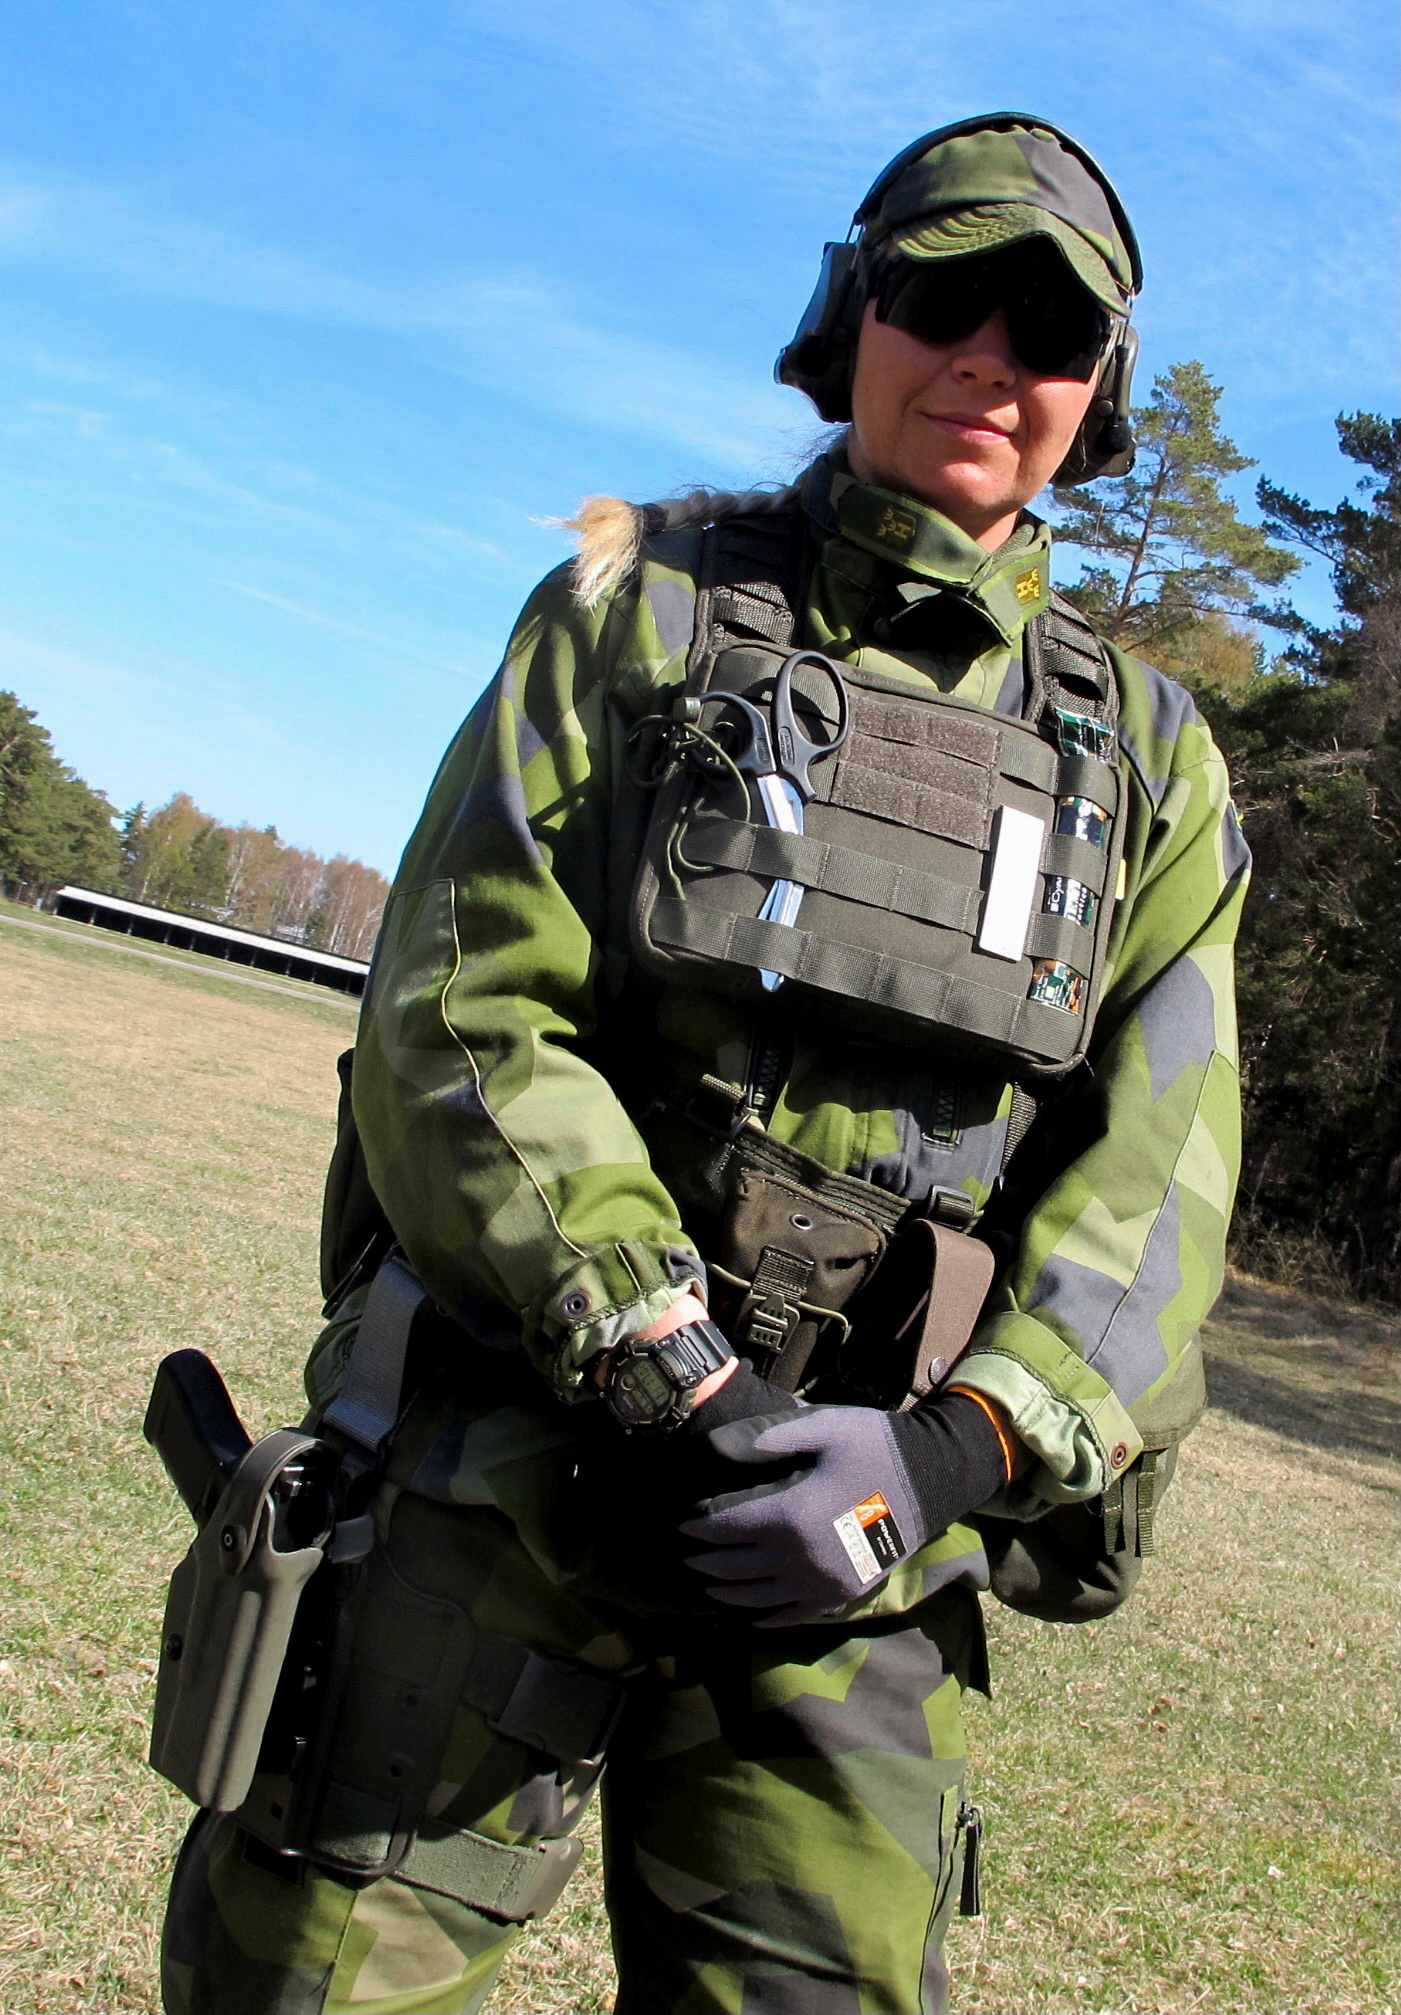 Swedish Home Guard volunteers practice at a shooting range in Gotland